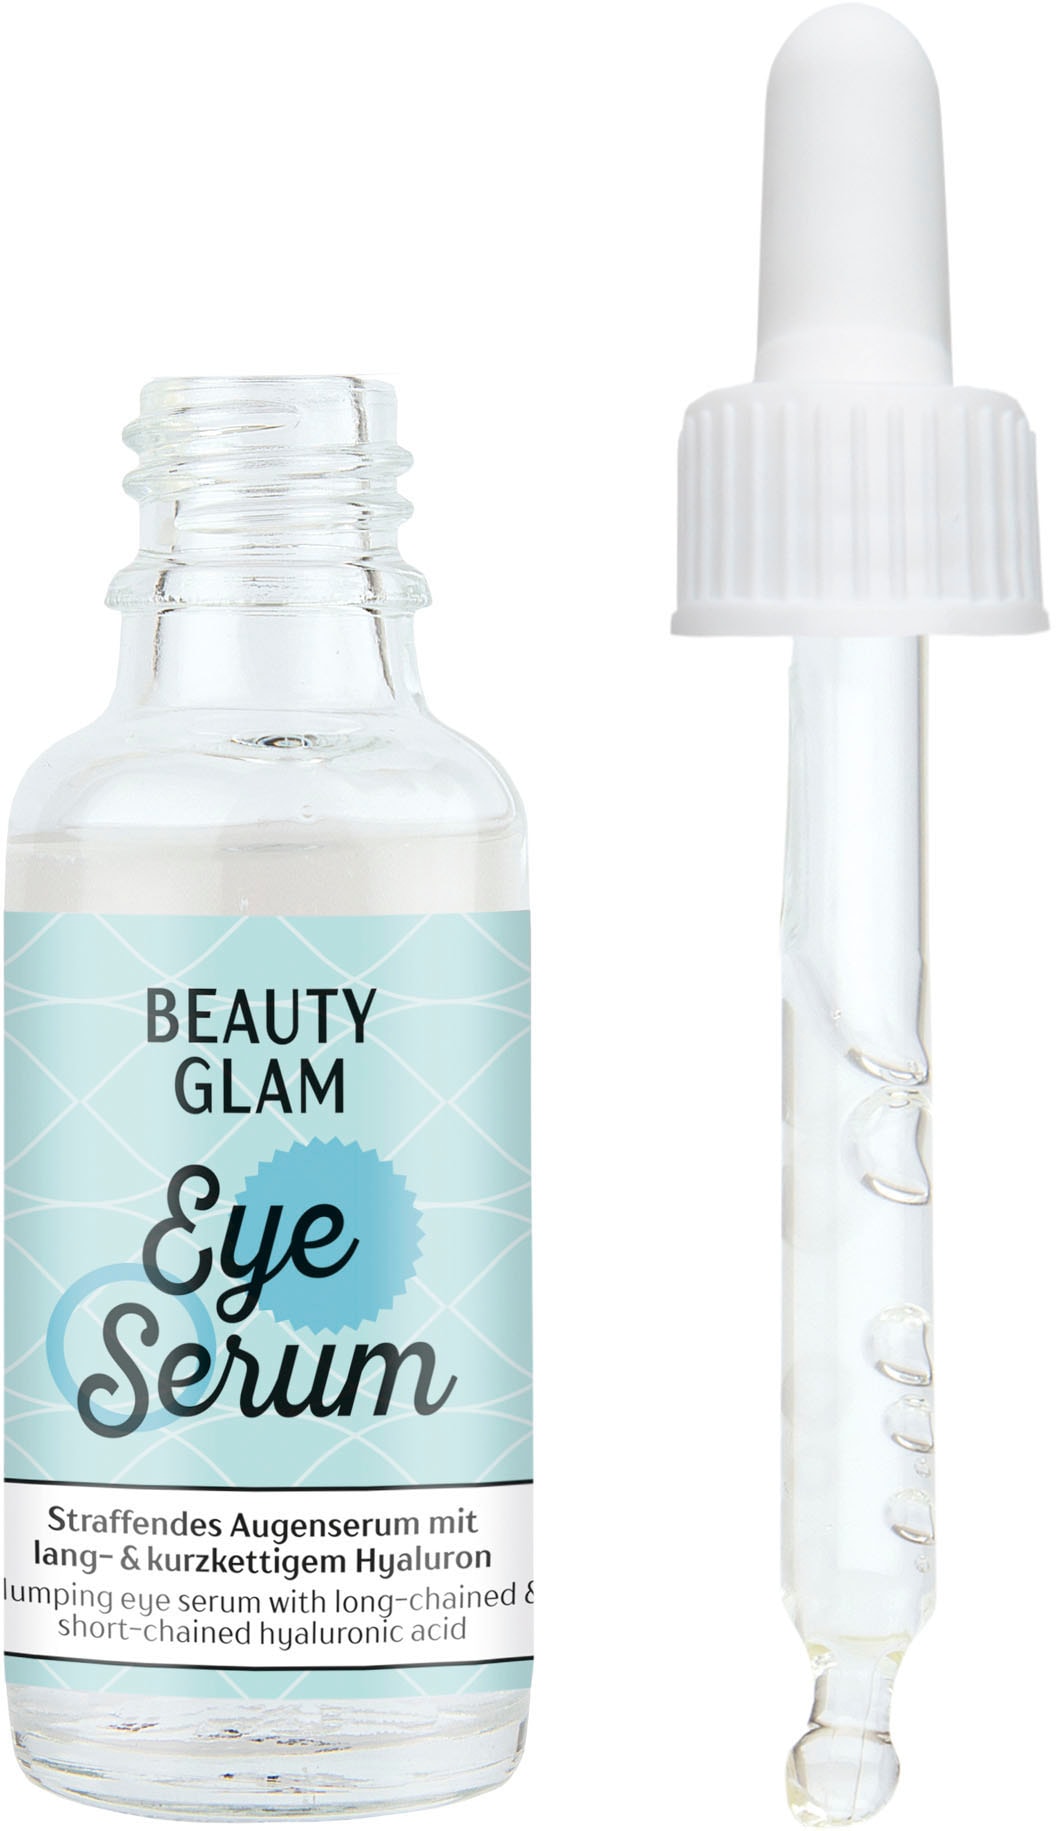 GLAM Eye online bei Augenserum UNIVERSAL »Beauty Serum« BEAUTY Glam